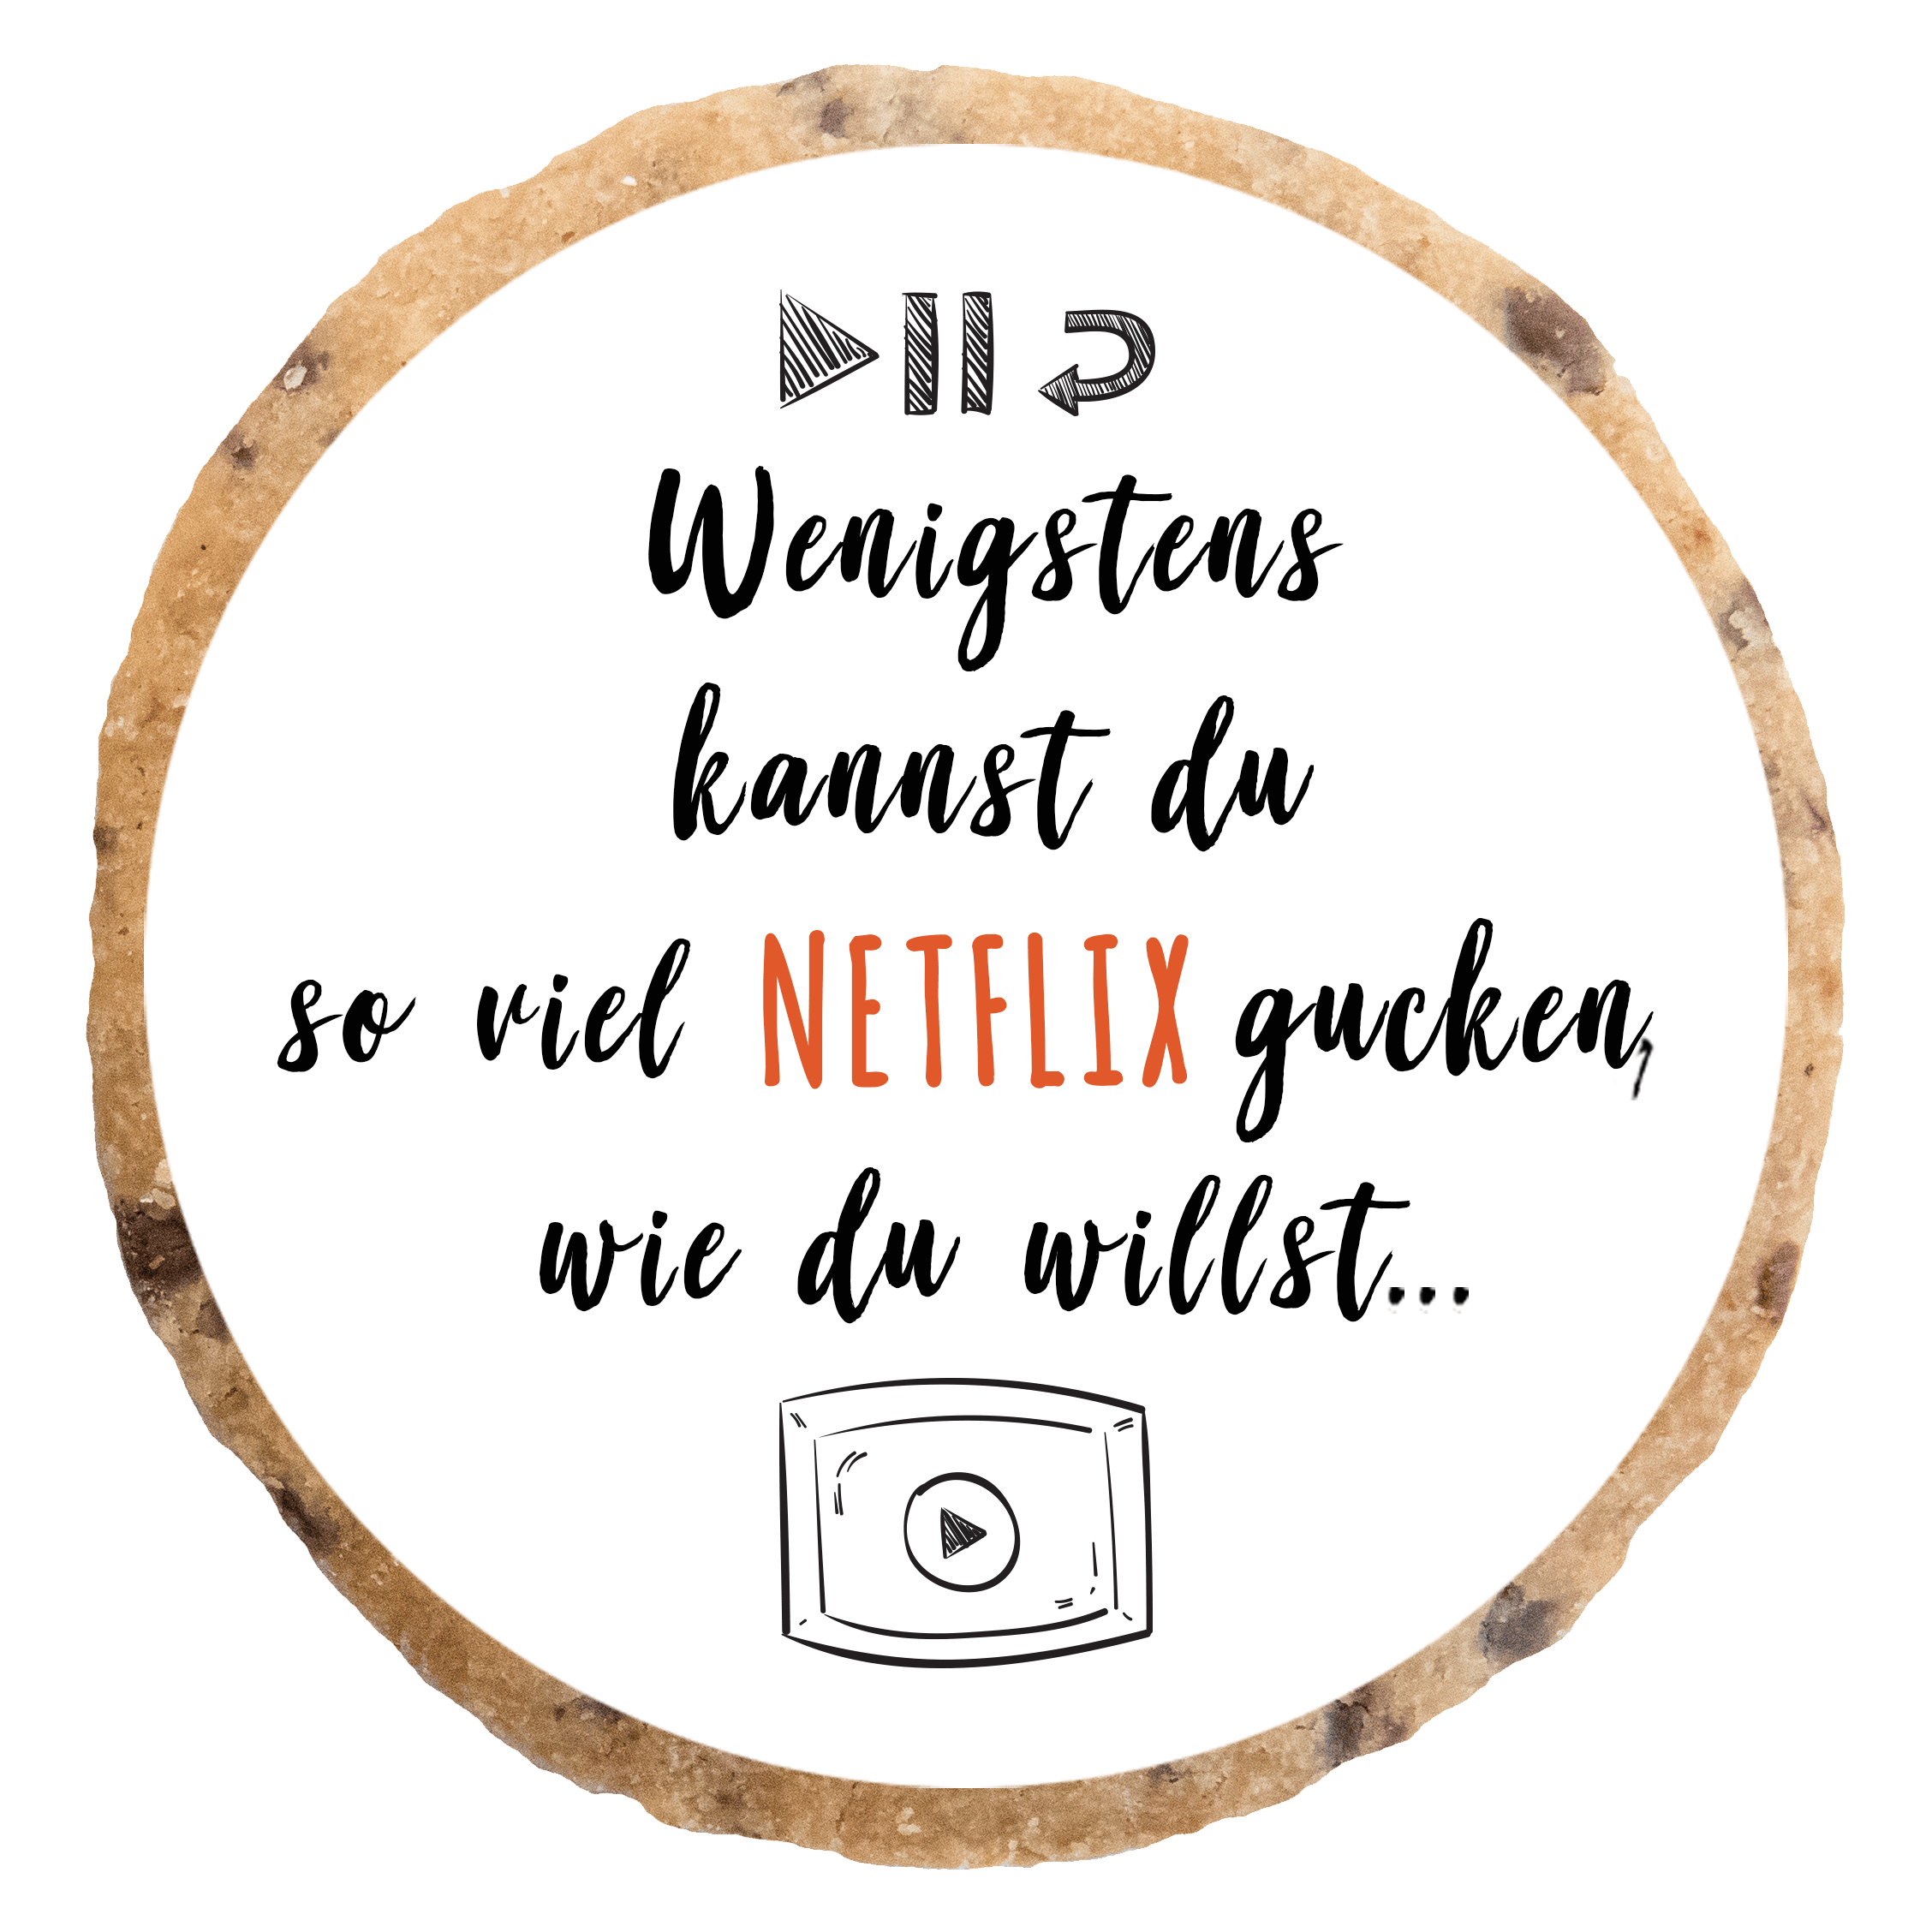 "So viel Netflix du willst " MotivKEKS